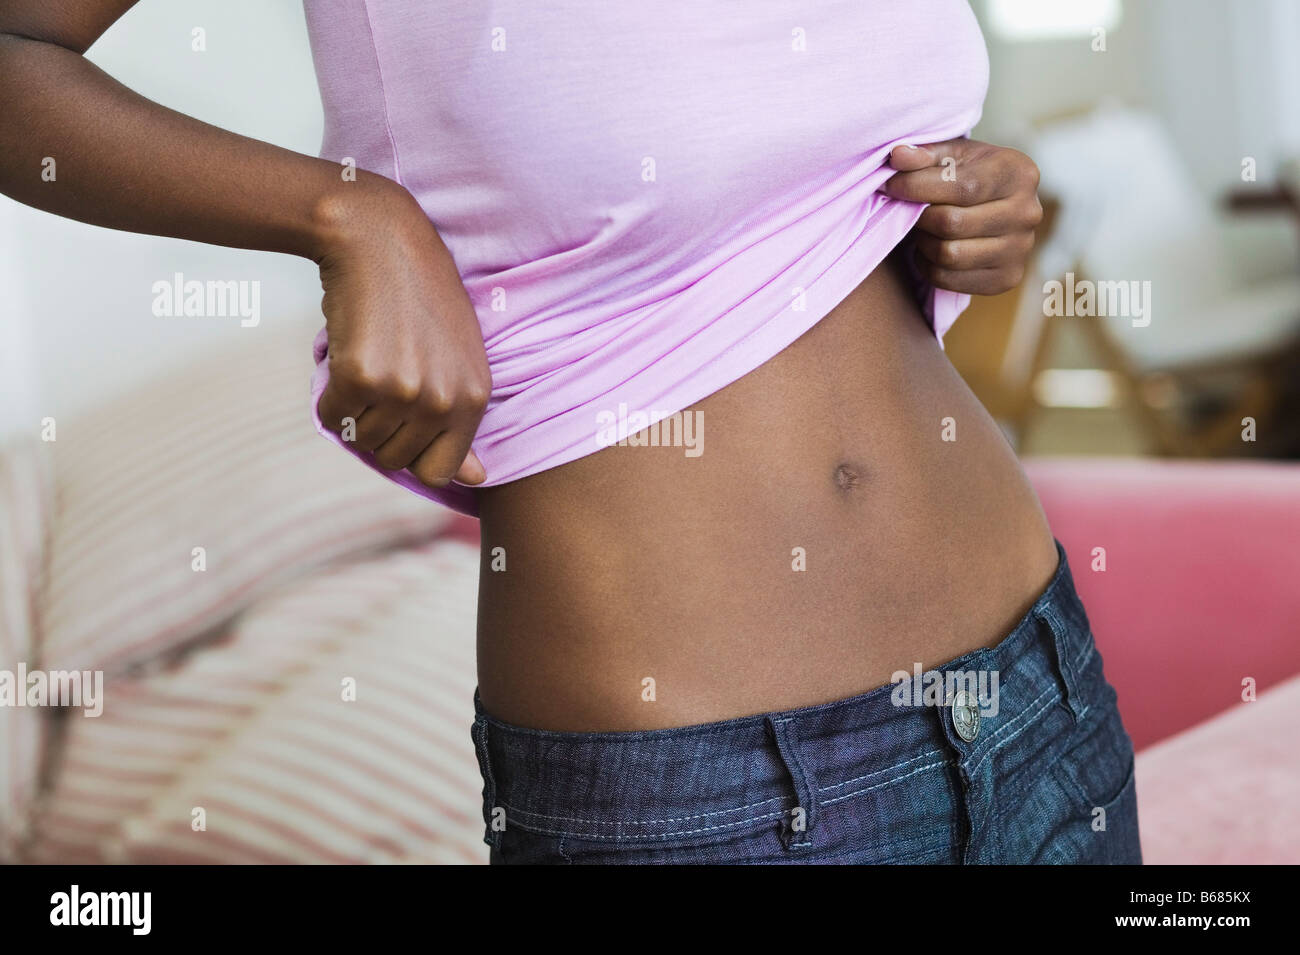 Woman Lifting Shirt to Show Stomach Stock Photo - Alamy